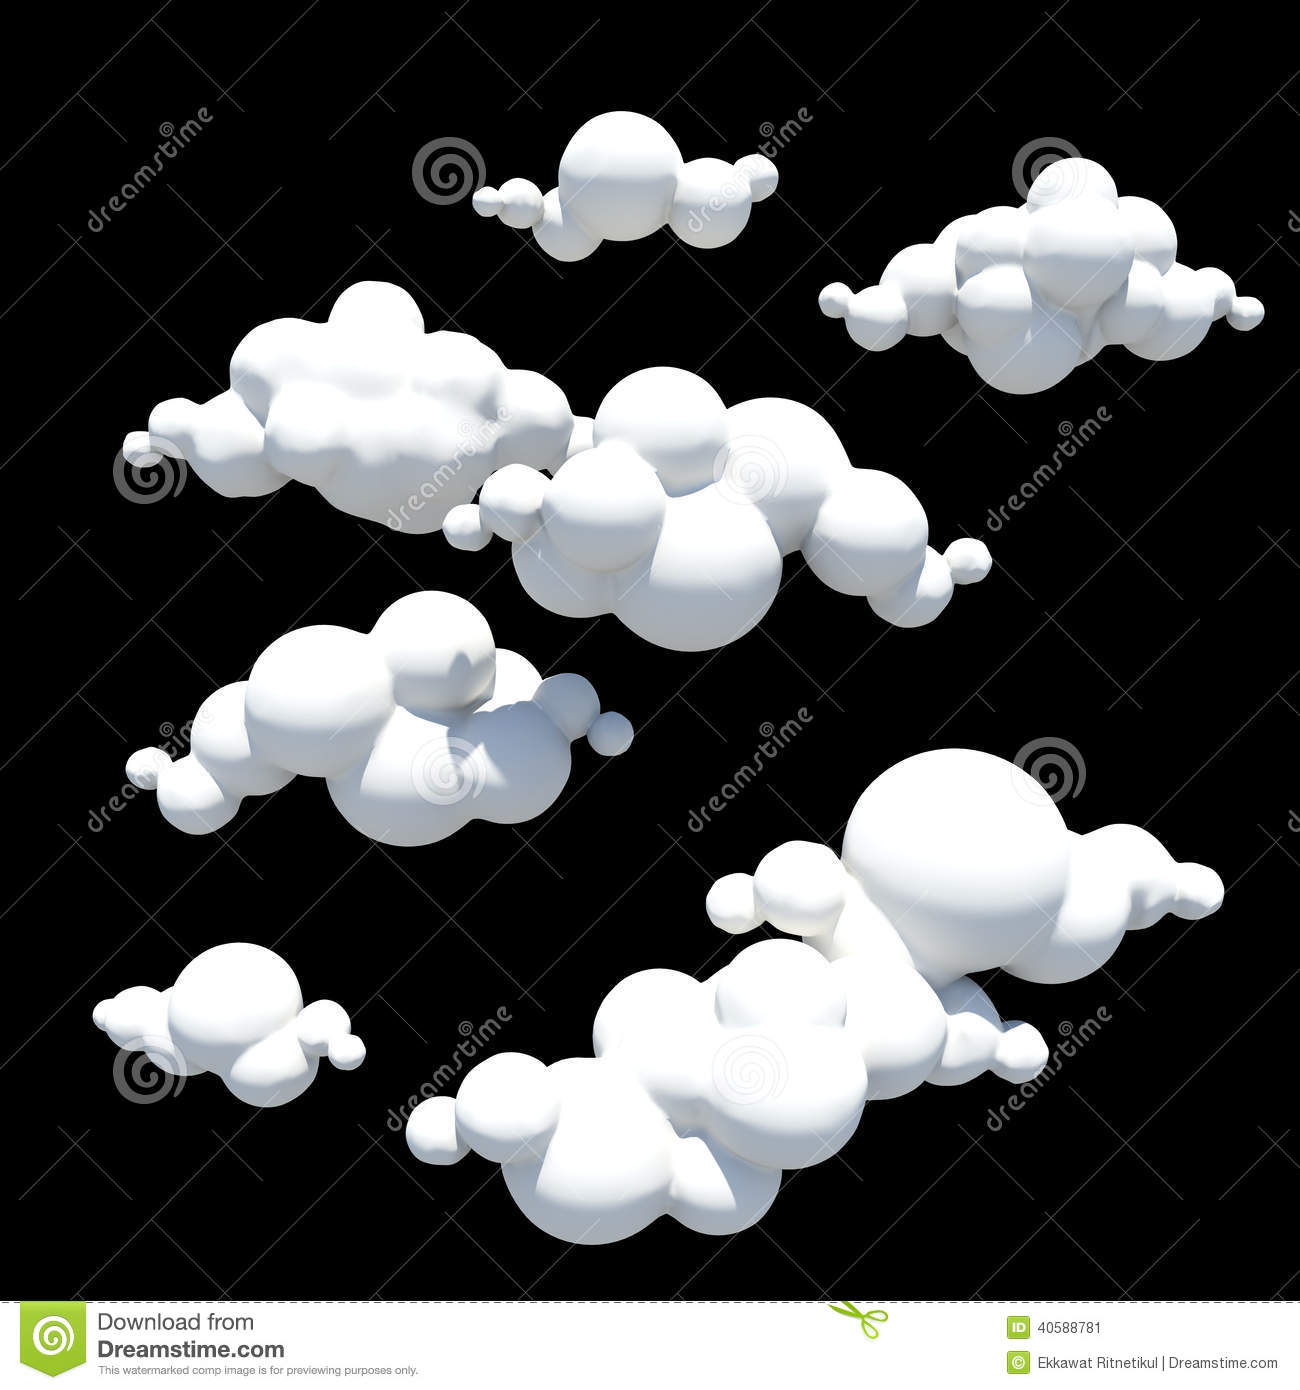 Cartoon Clouds, Design Element, PNG Transparent Background Stock.